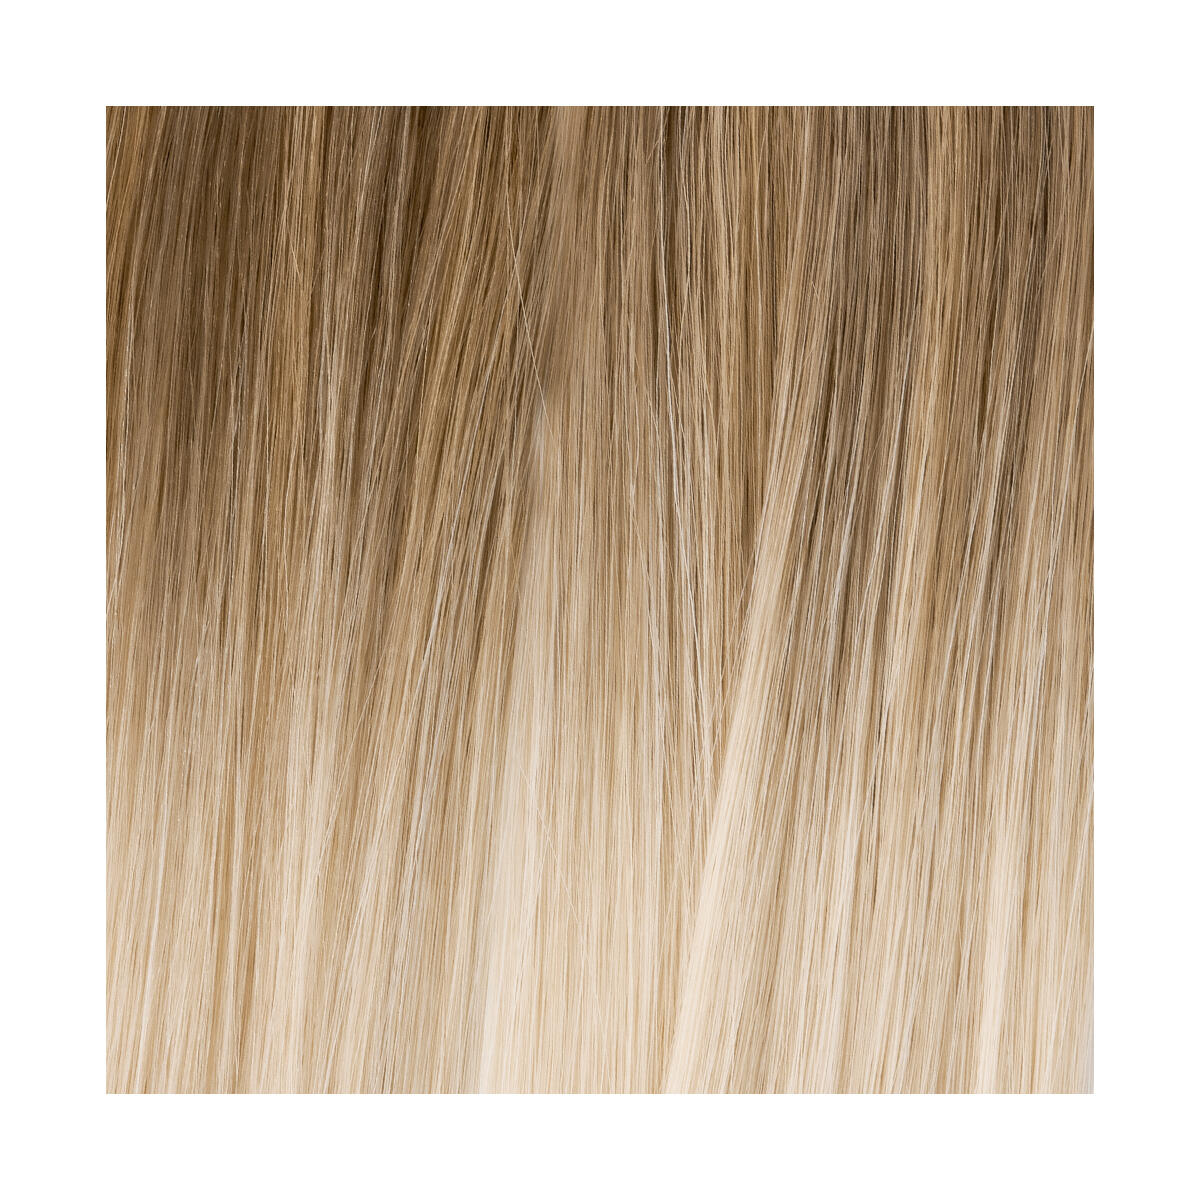 Colour Sample B7.3/10.10 Cool Platinum Blonde Balayage